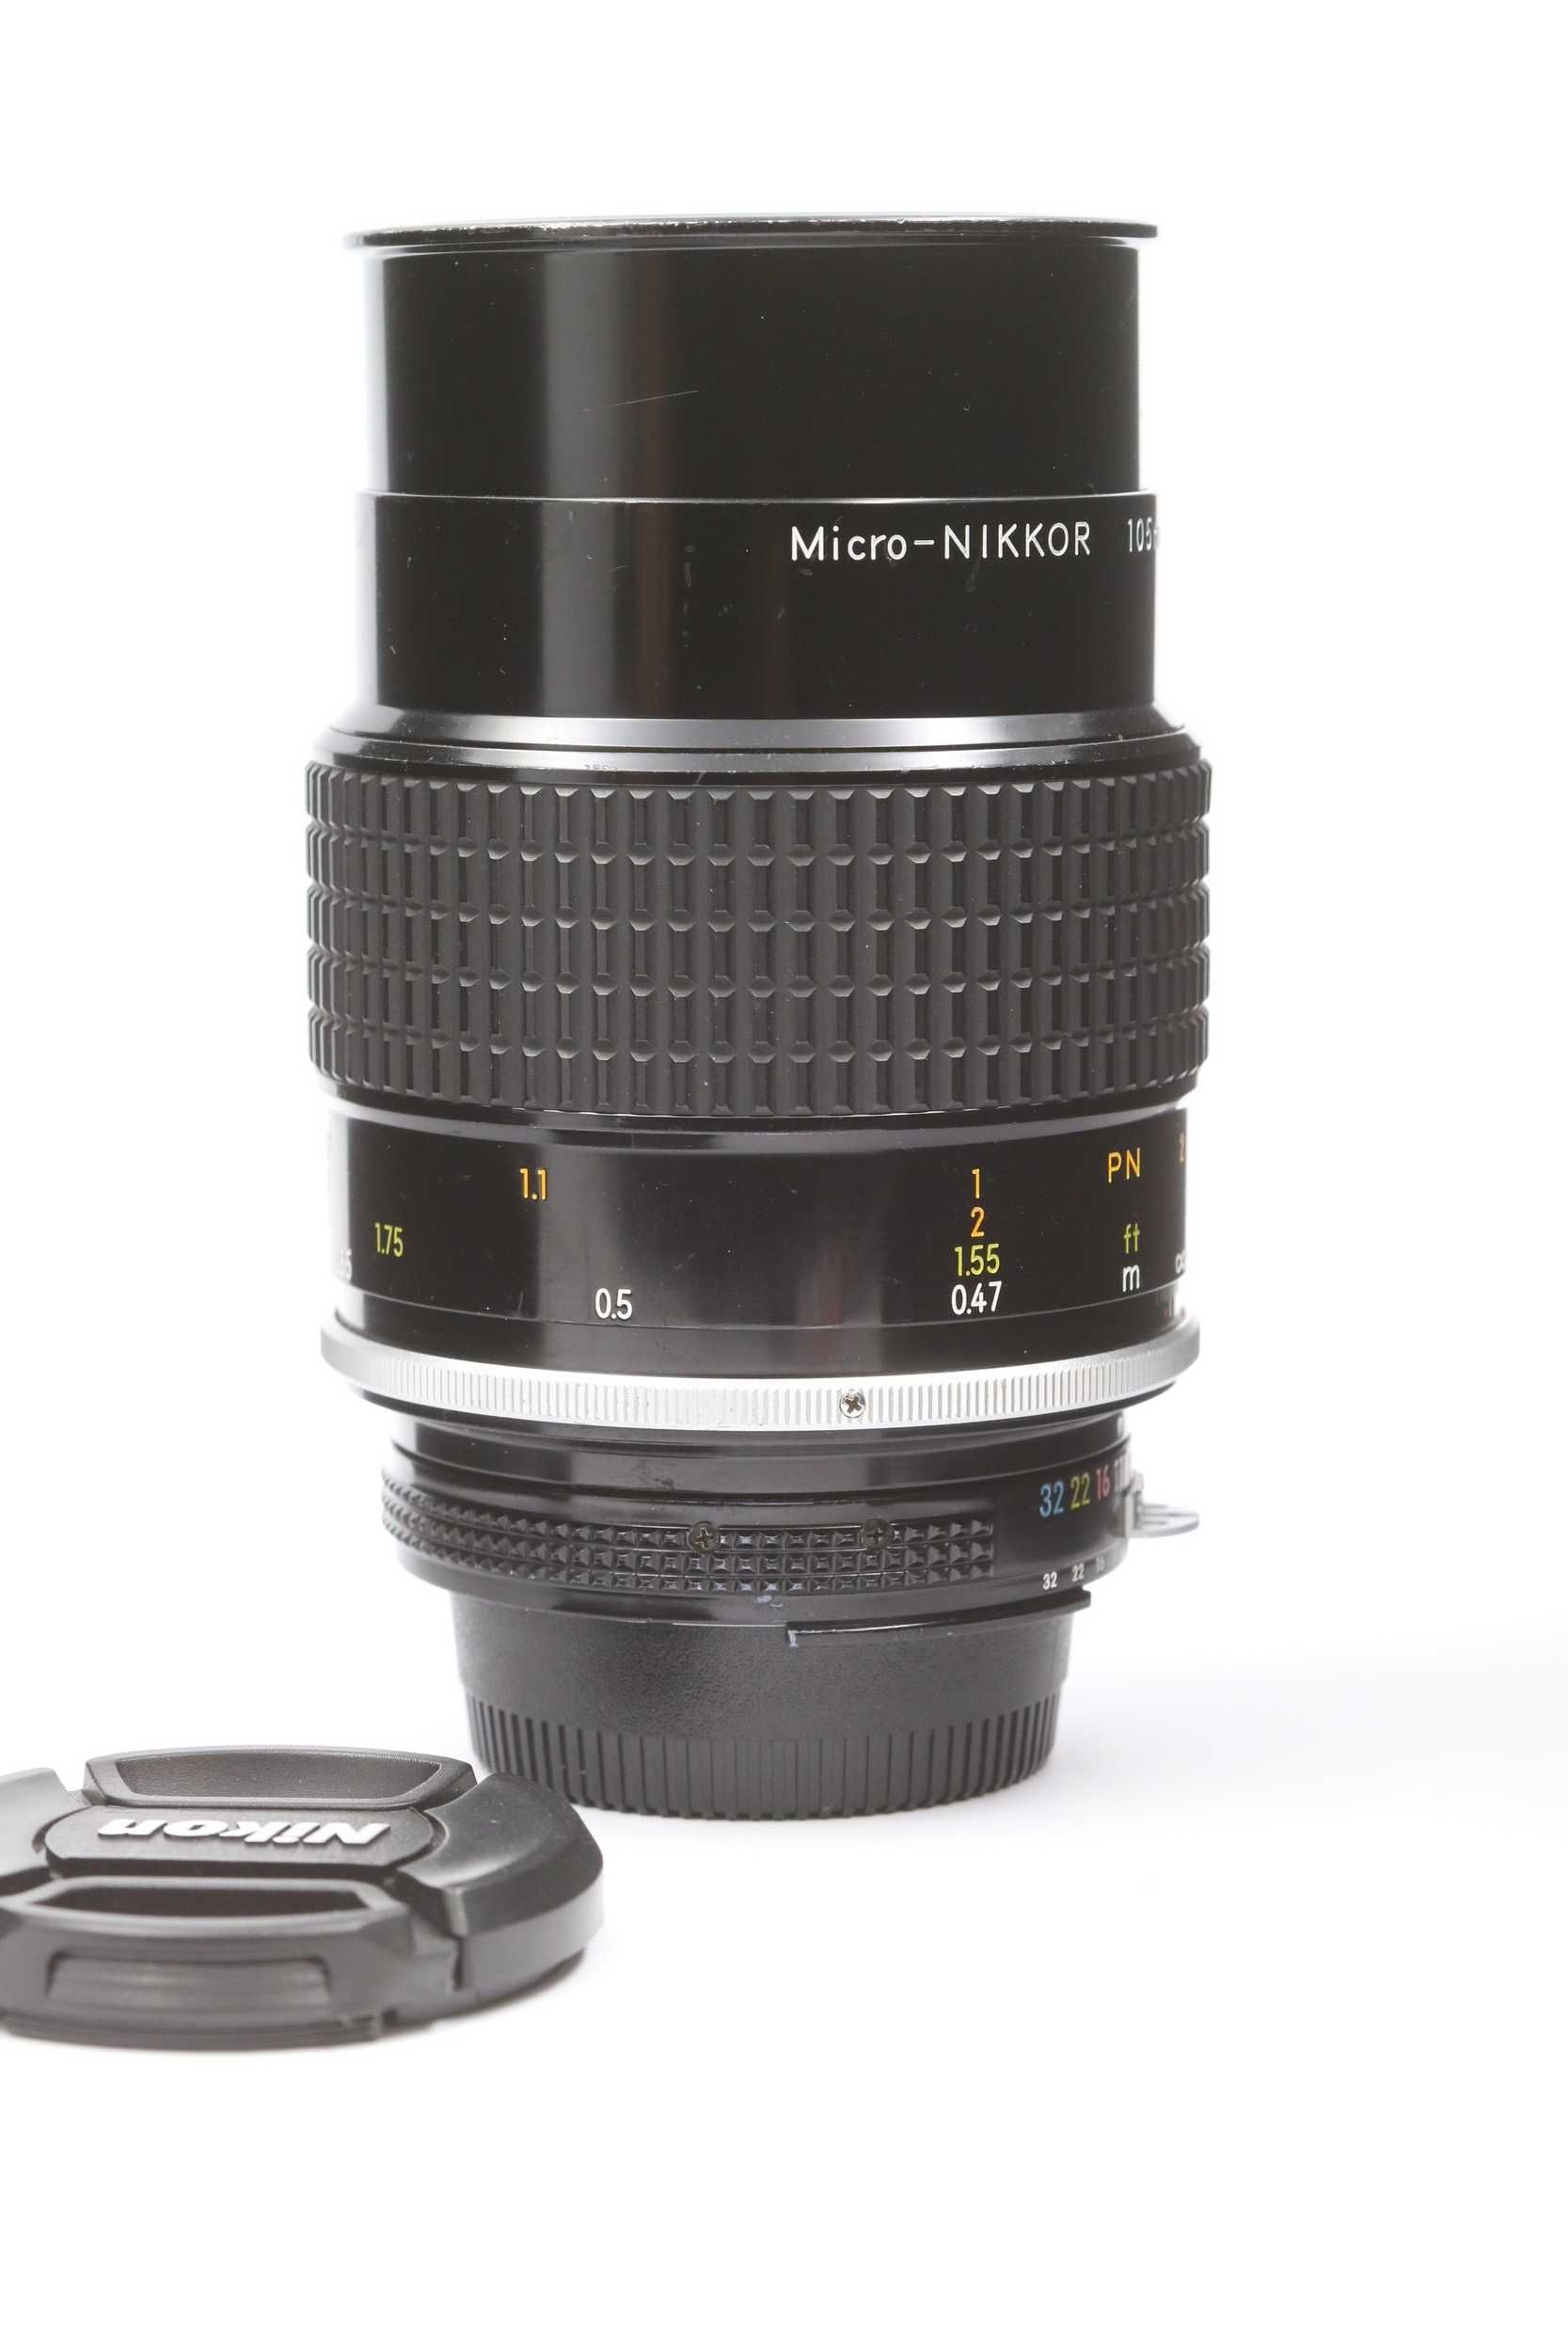 Nikon Micro-NIKKOR 105mm f4.0 Ai